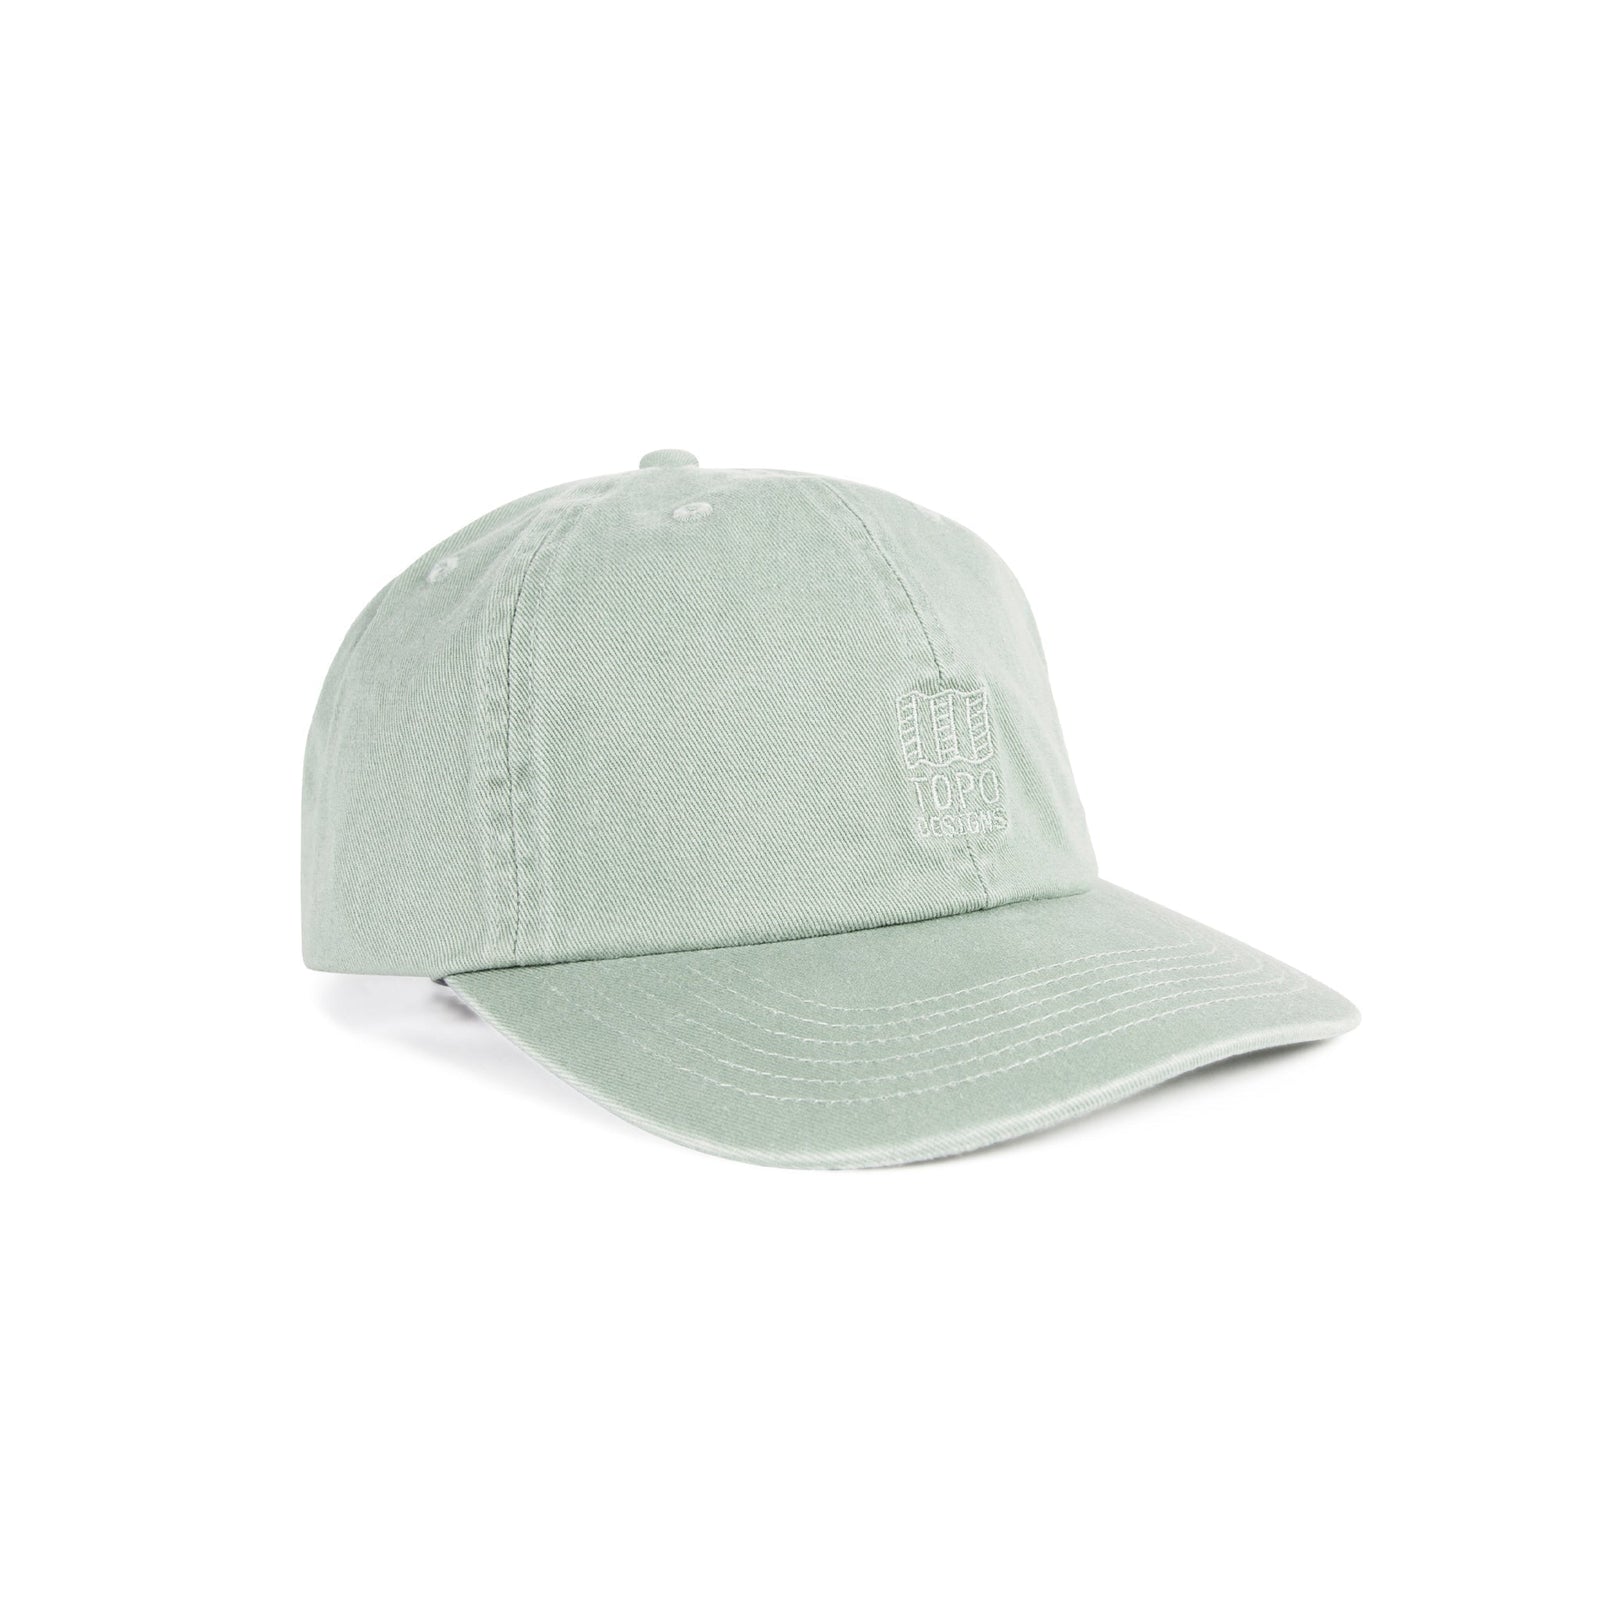 Topo Designs Mountain Ball Cap cotton hat in "Light Mint".